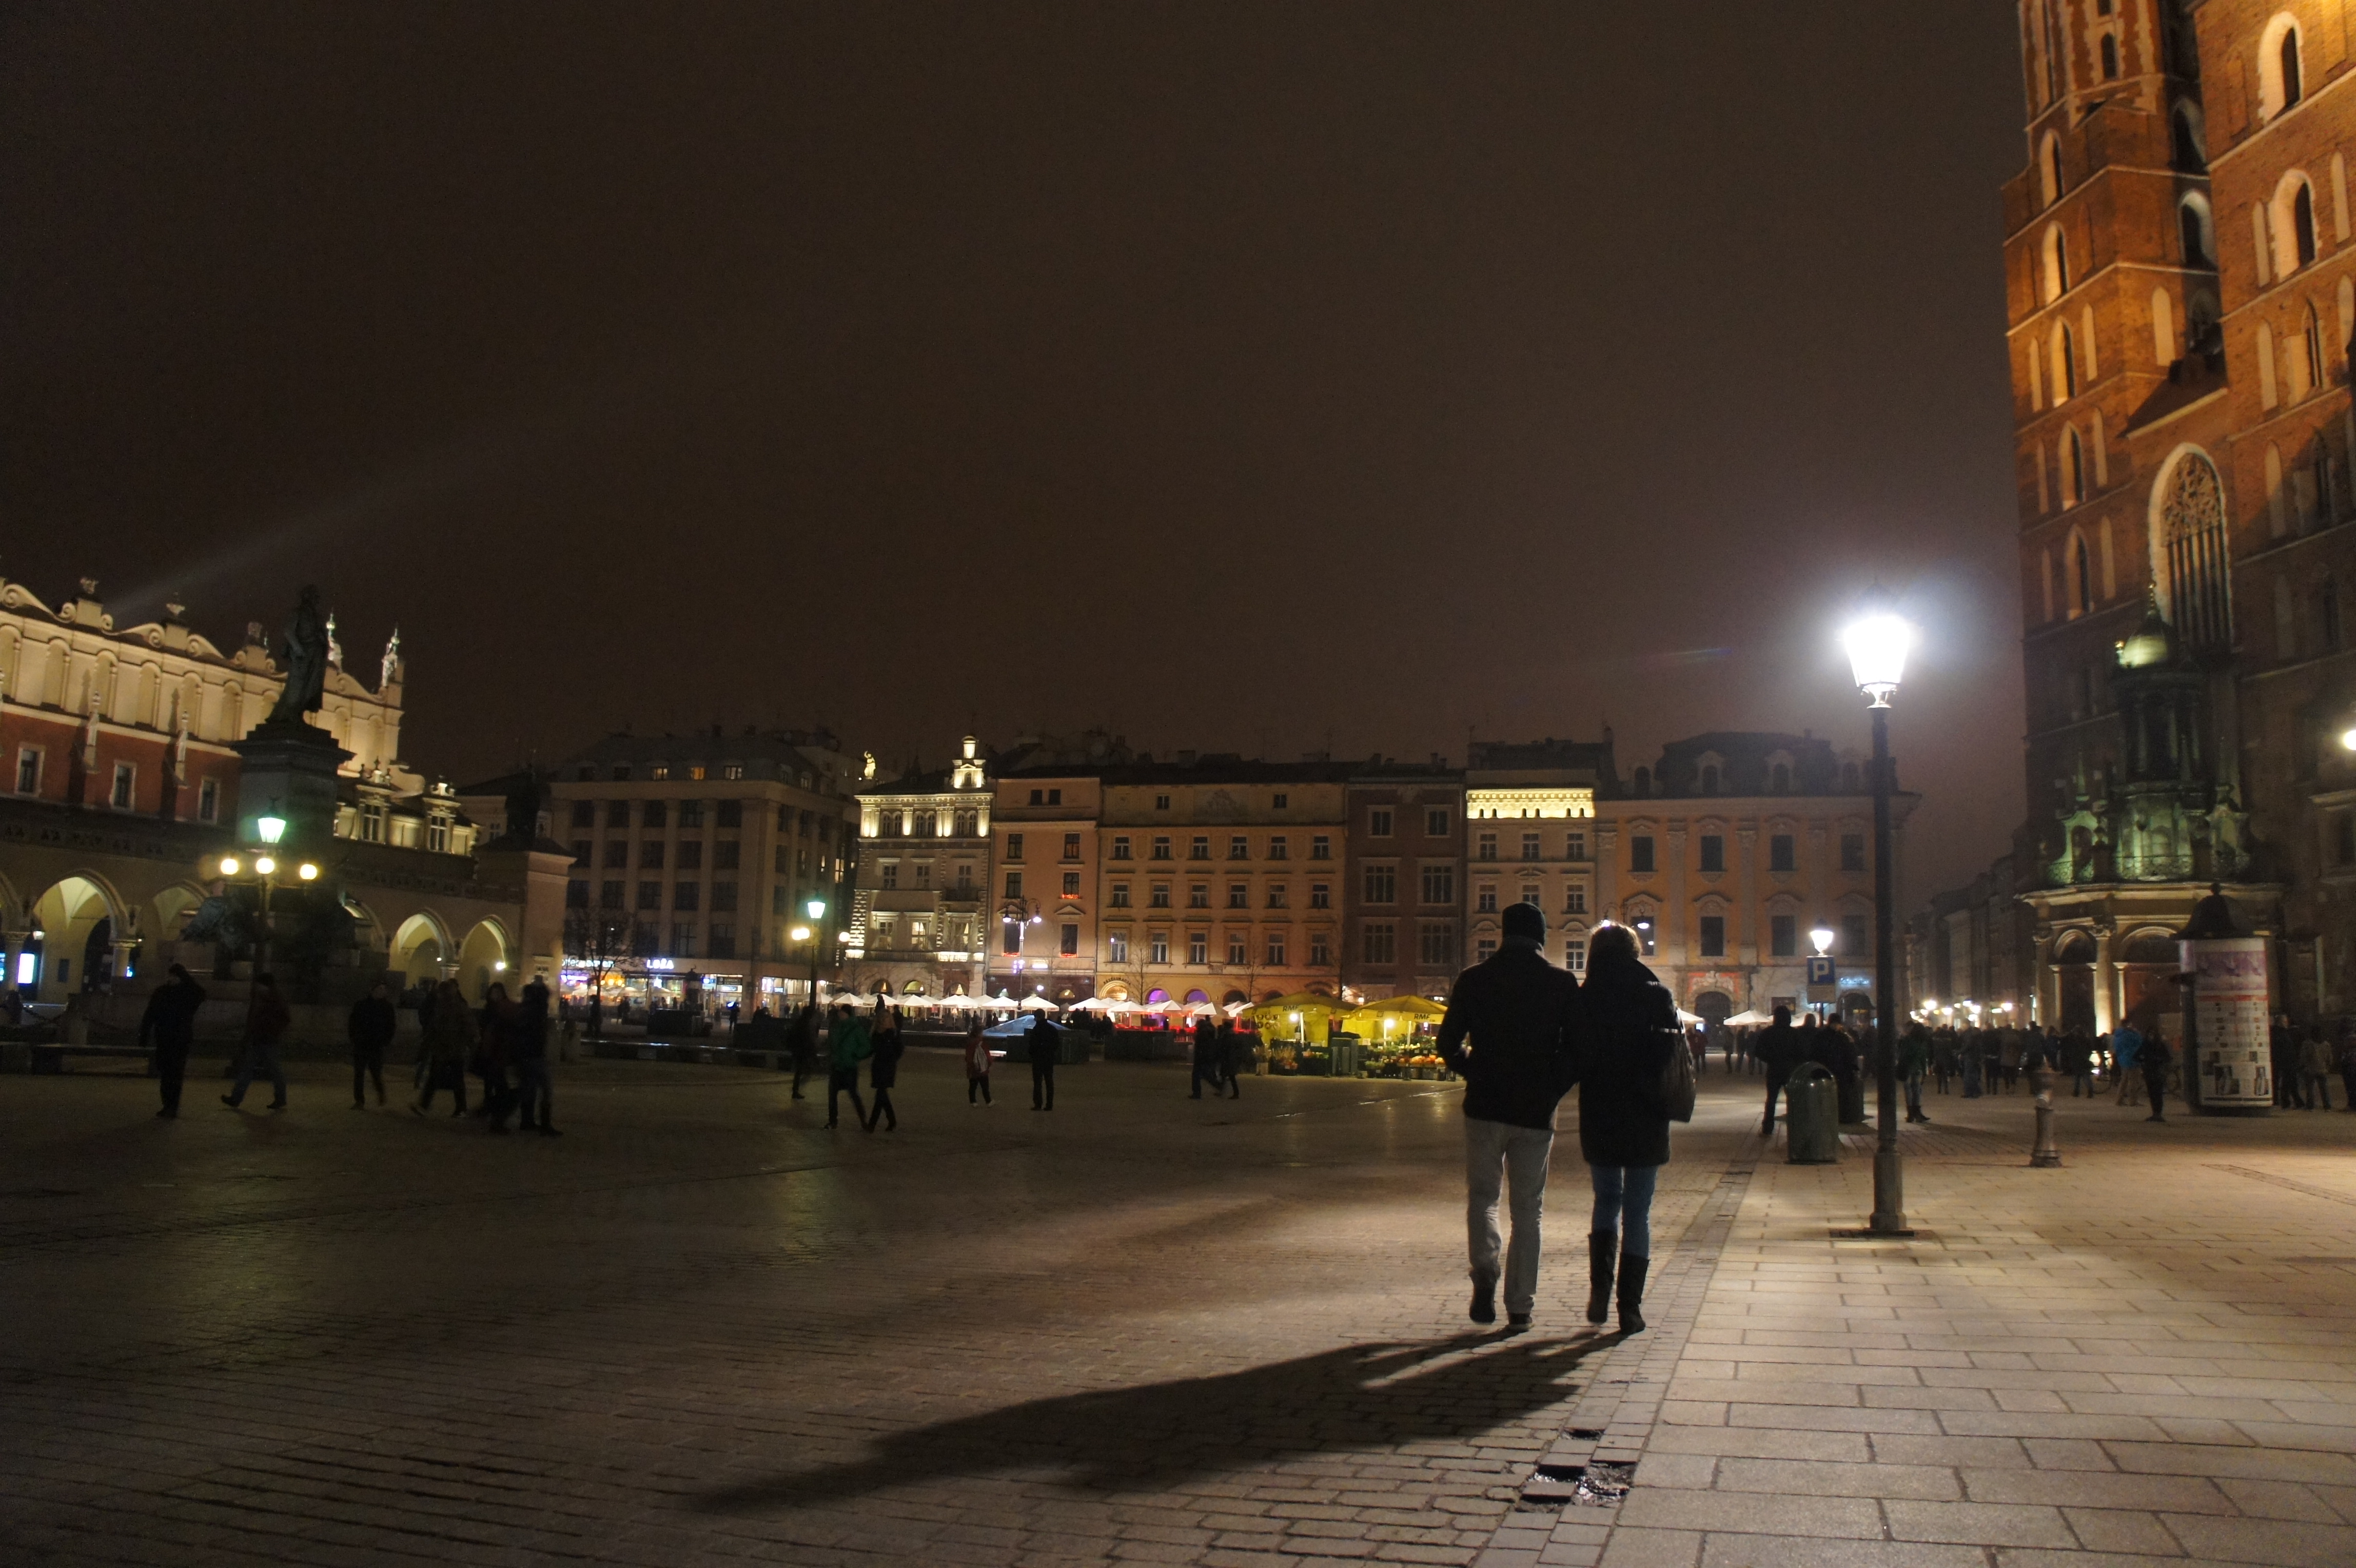 Krakow square (Rynek) by night